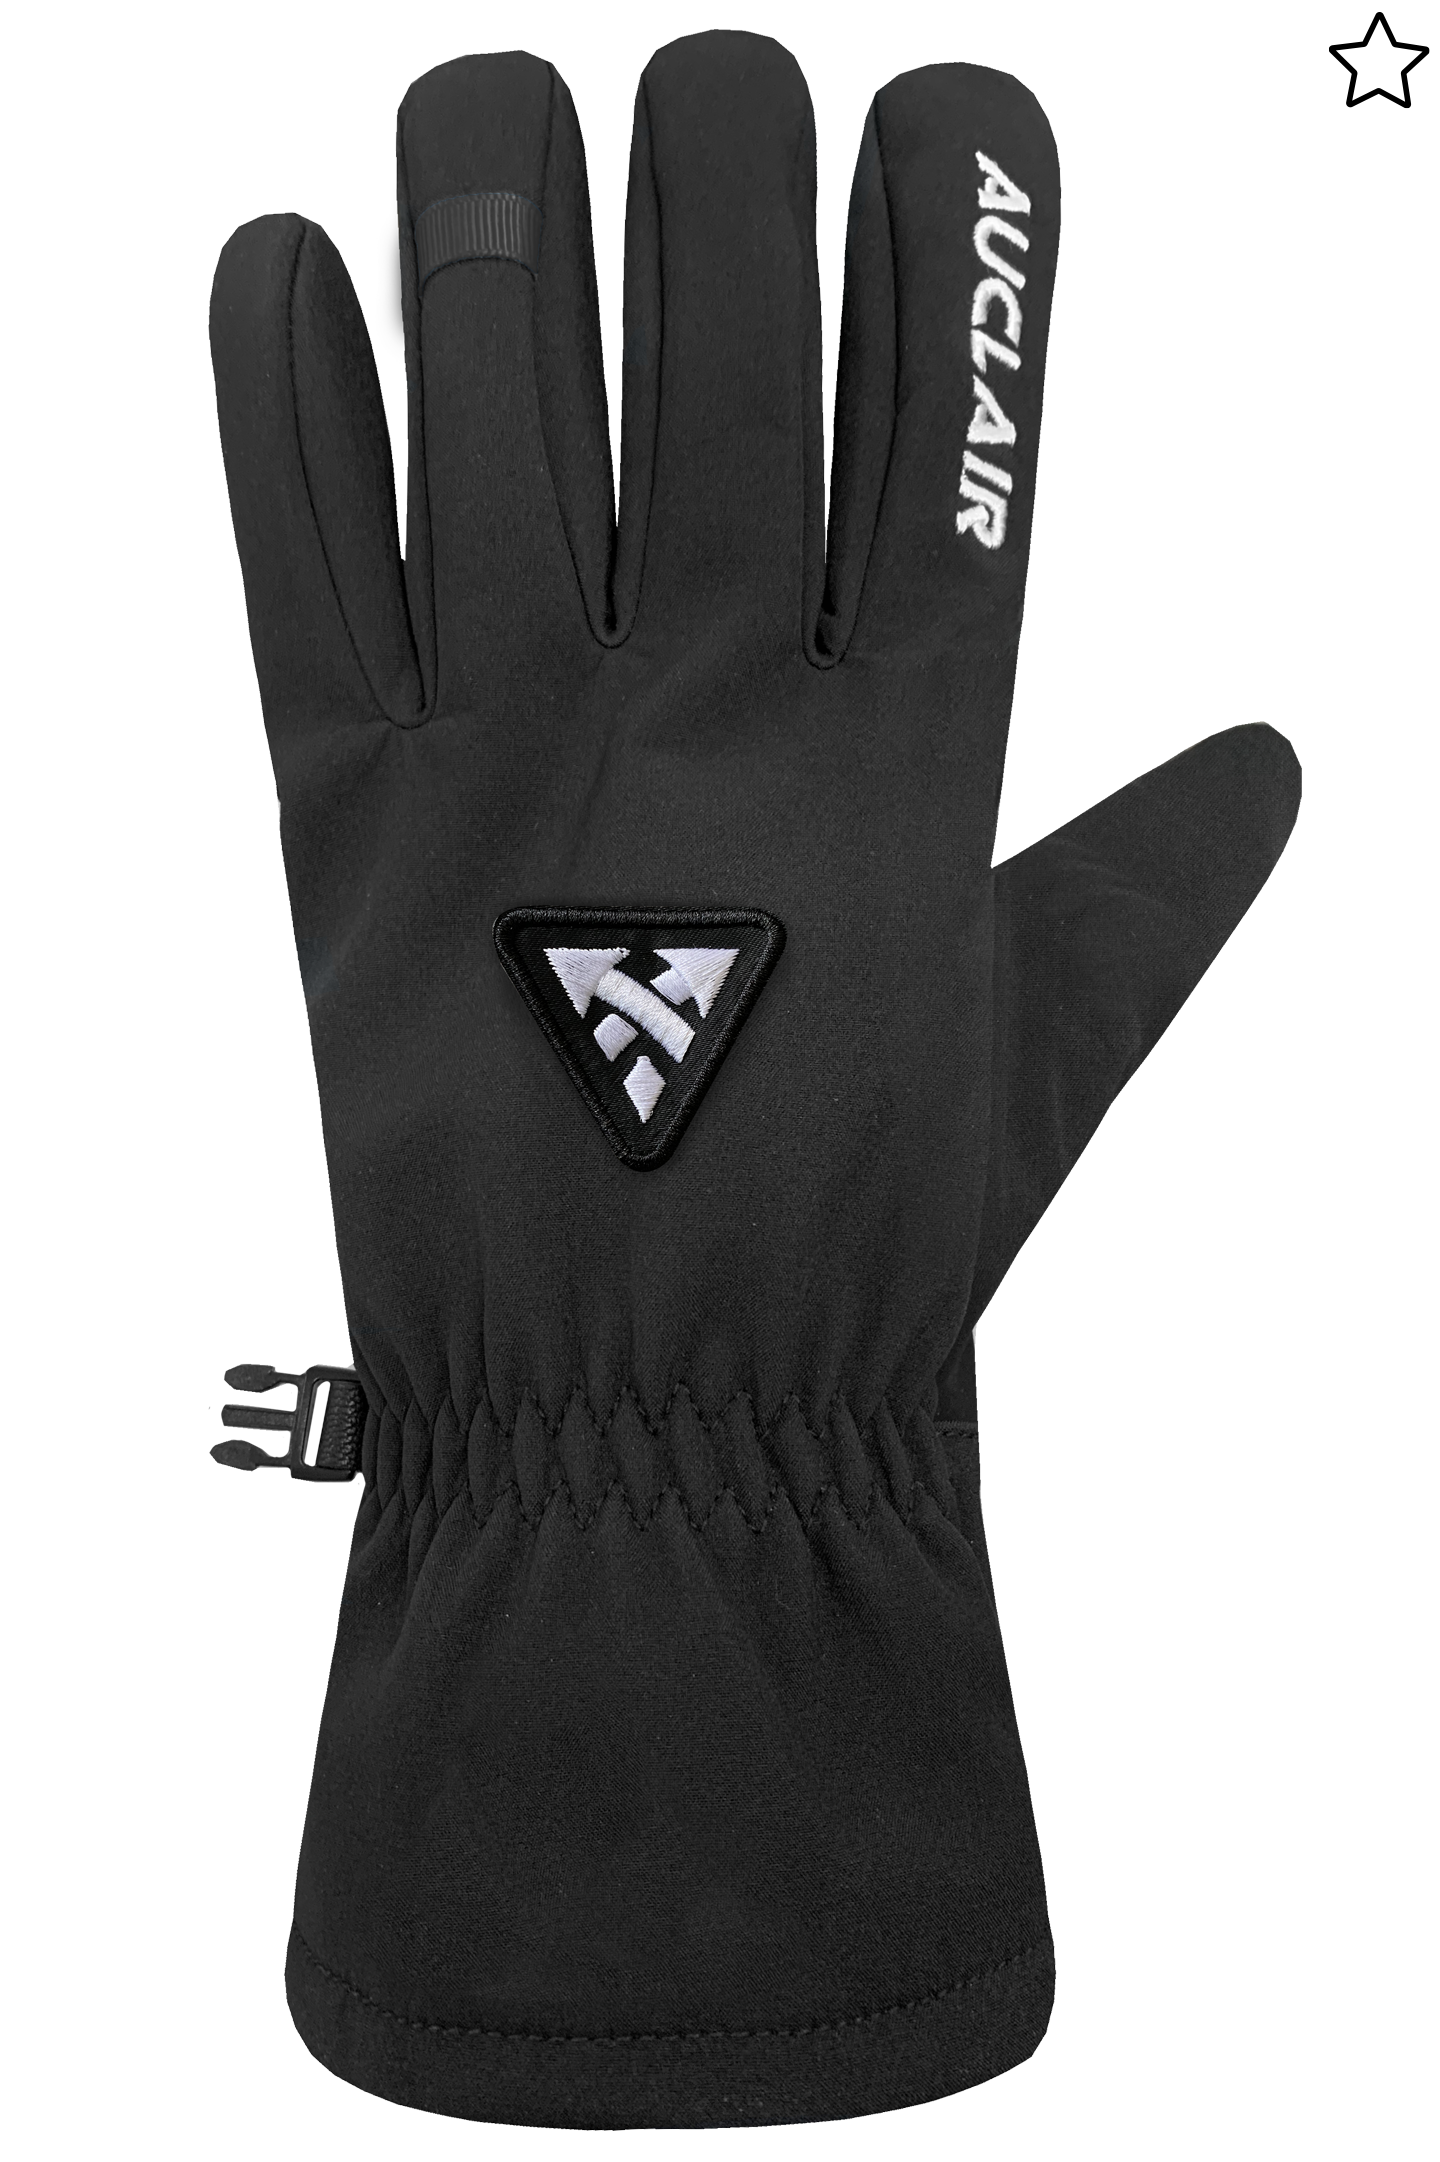 Women's Touring Gloves u0026 Mittens: Backcountry u0026 Off-Piste | Auclair